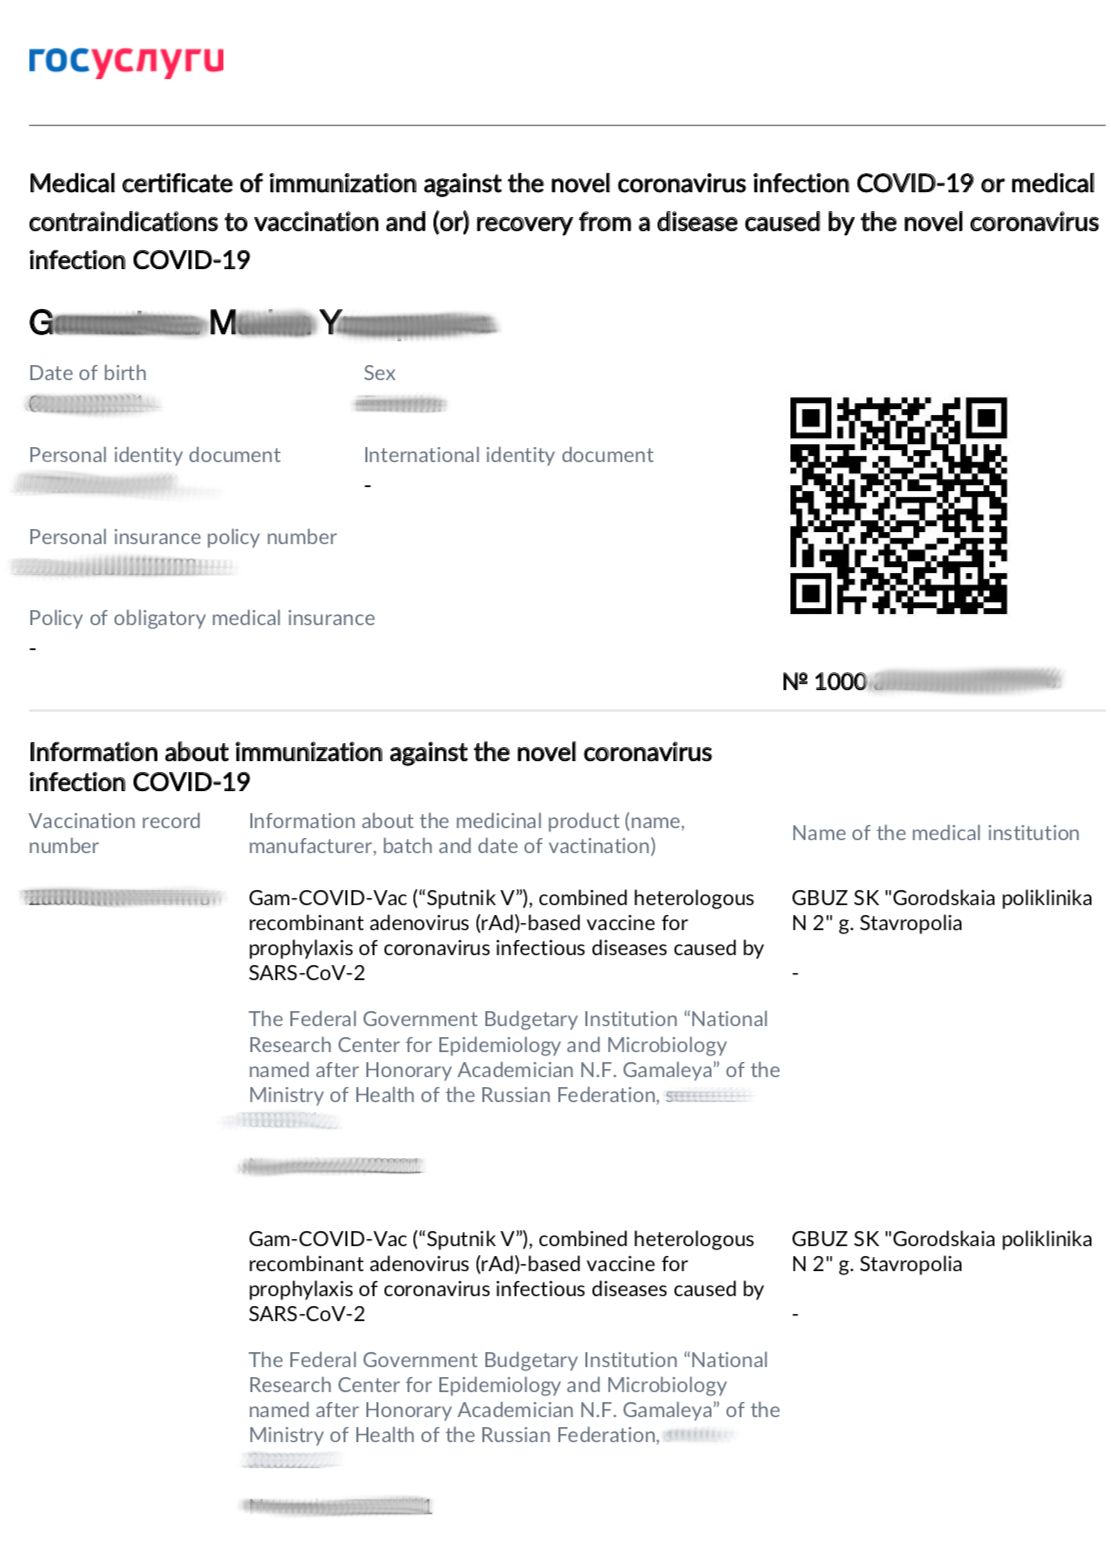 Как проверить сертификат о вакцинации от COVID-19